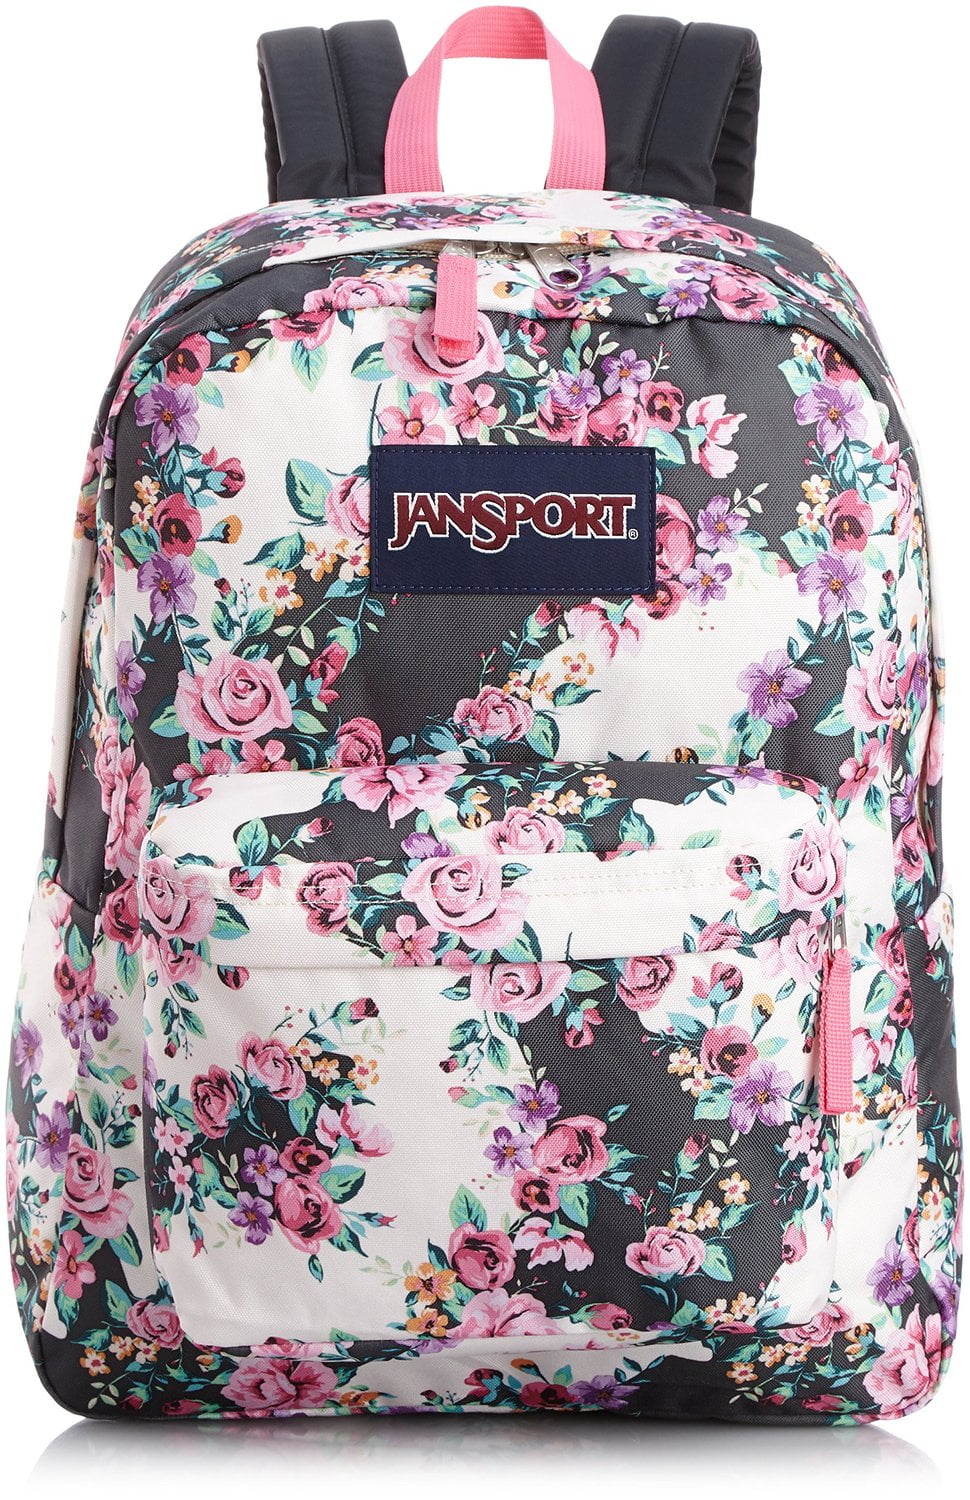 JanSport - Classic SuperBreak Backpack - Multi Grey Floral Flouris - 0 - 0